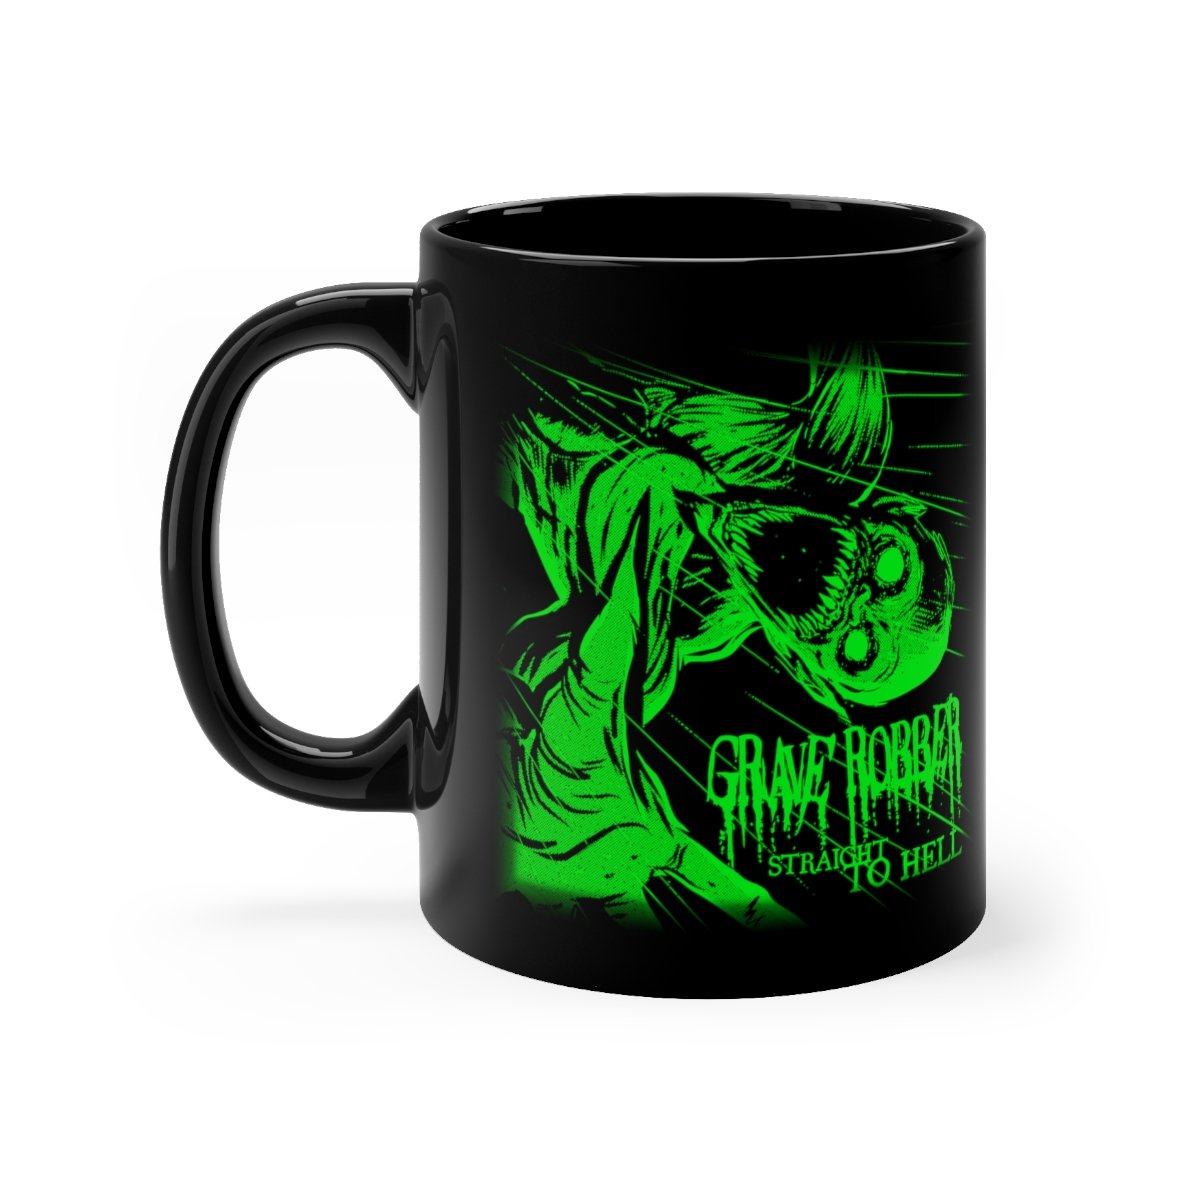 Grave Robber Straight to Hell (Green) Black mug 11oz